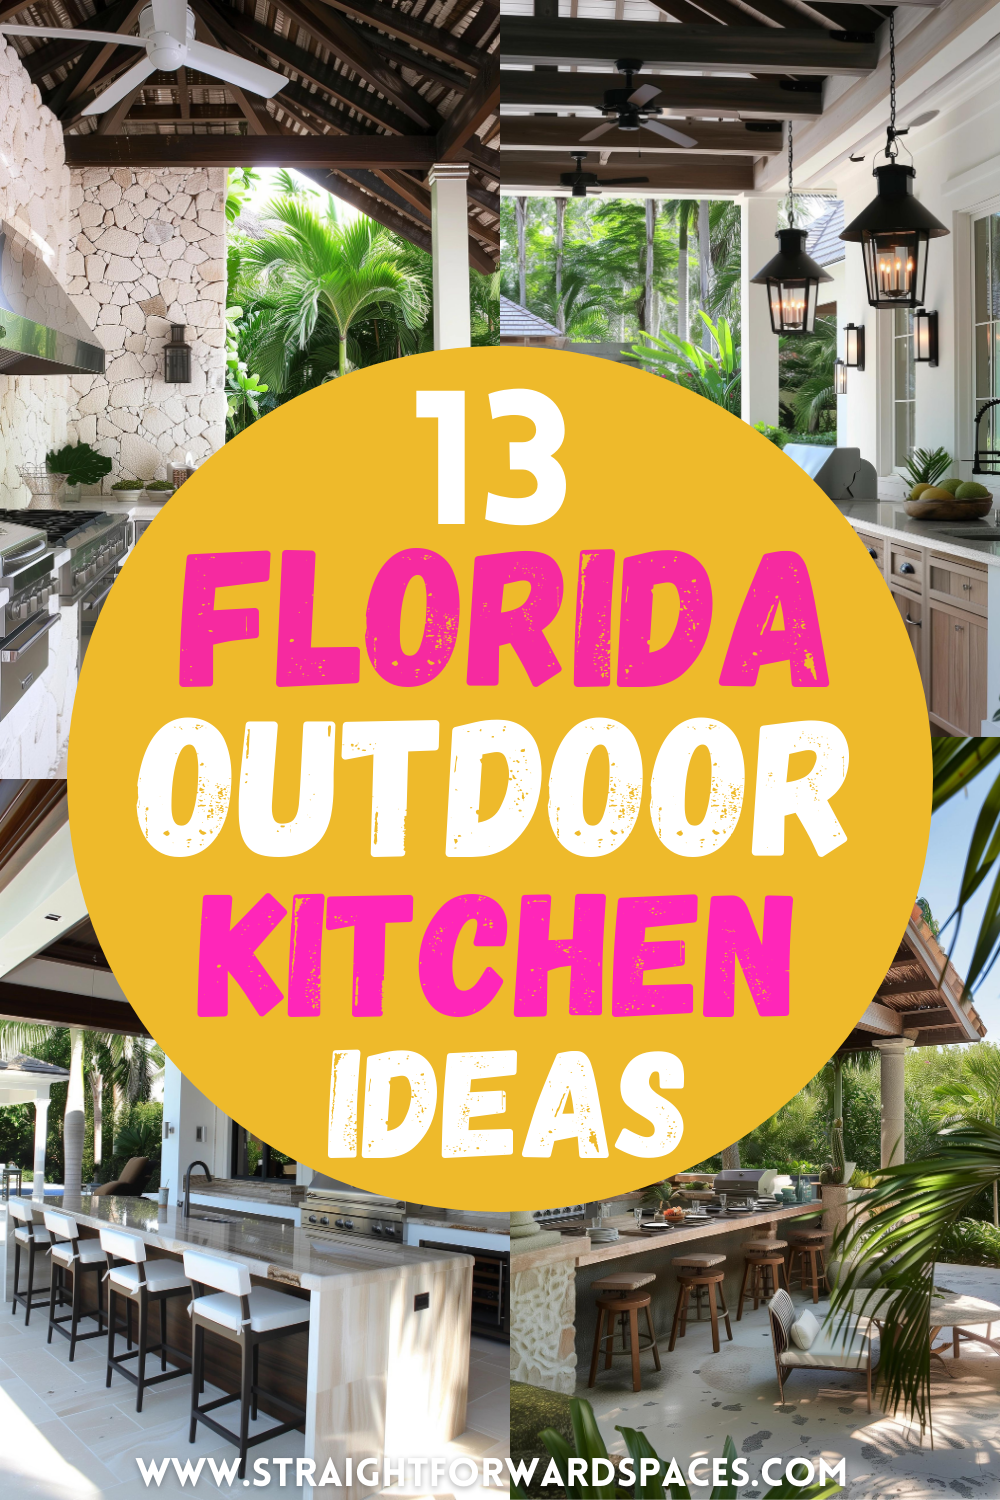 Florida outdoor kitchen